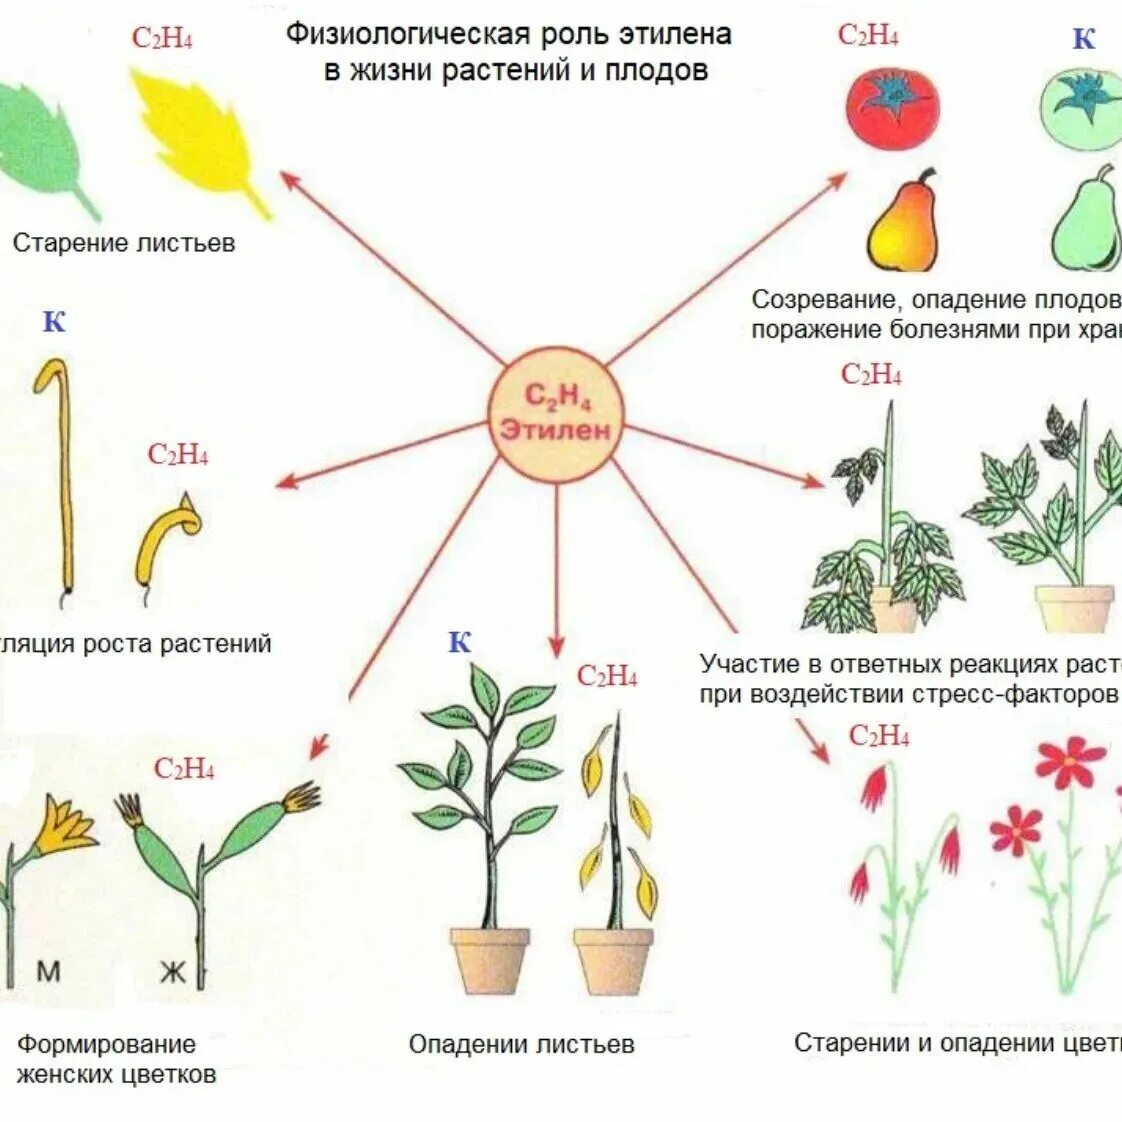 Влияние фитогормонов на растения. Этилен фитогормон. Влияние этилена на растения. Этилен гормон роста. Этилен фитогормон функции.